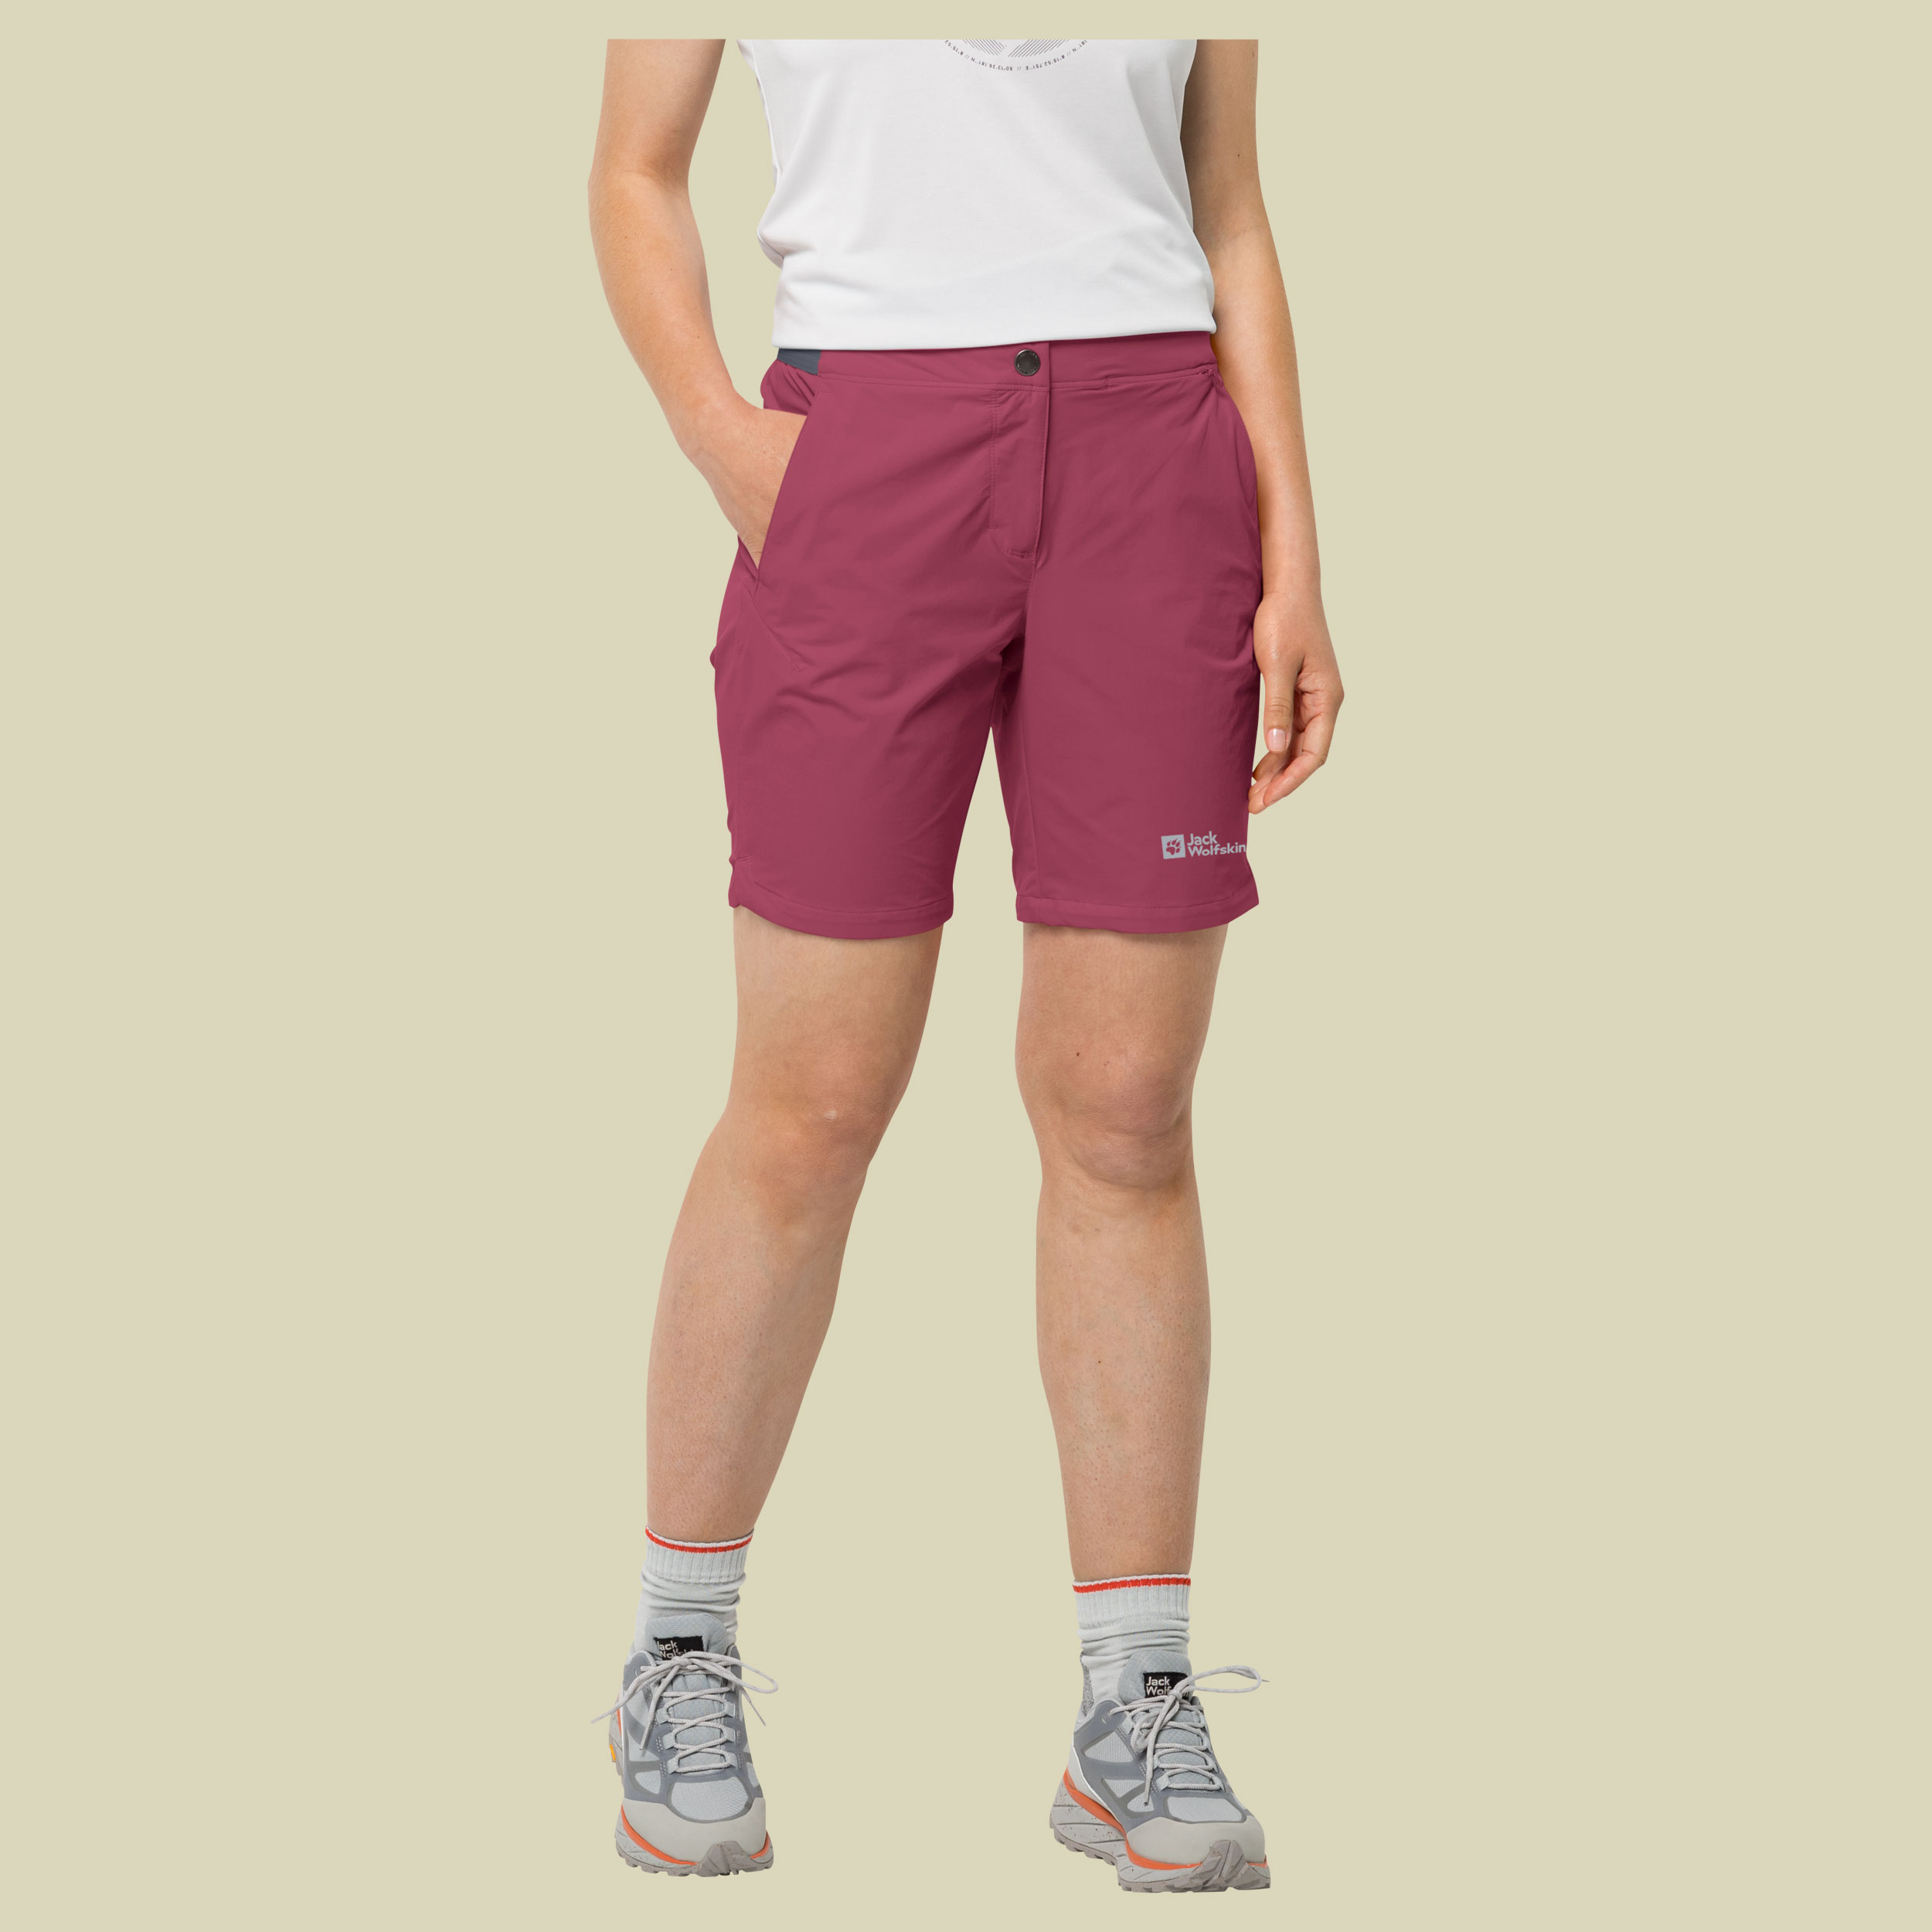 Hilltop Trail Shorts Women Größe 36 Farbe sangria red